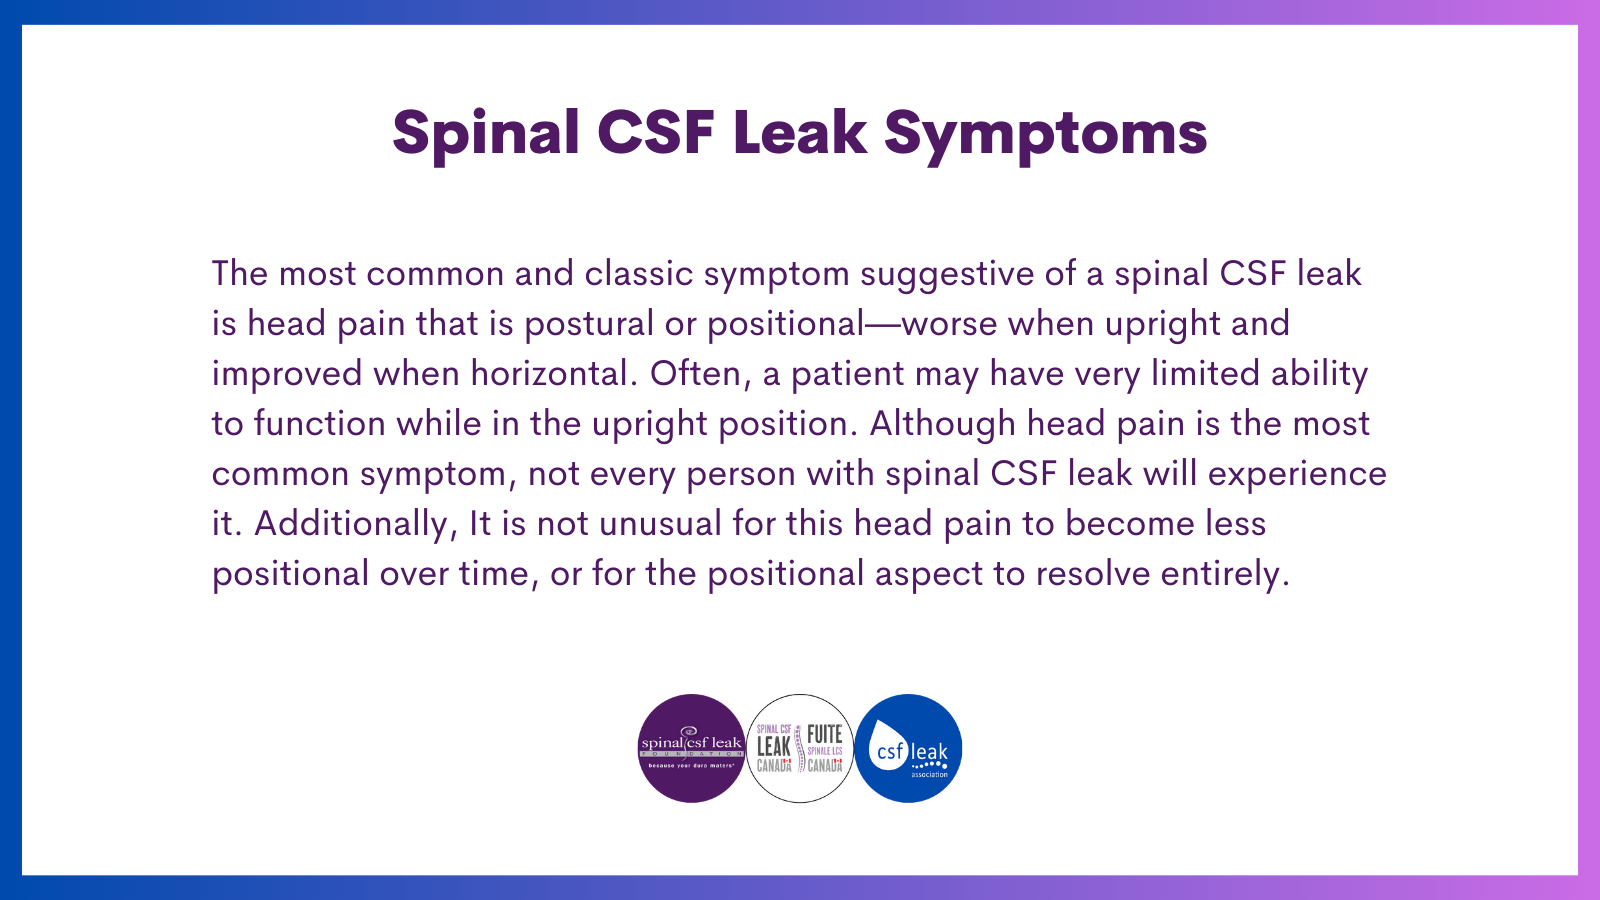 Symptoms of Spinal CSF Leak